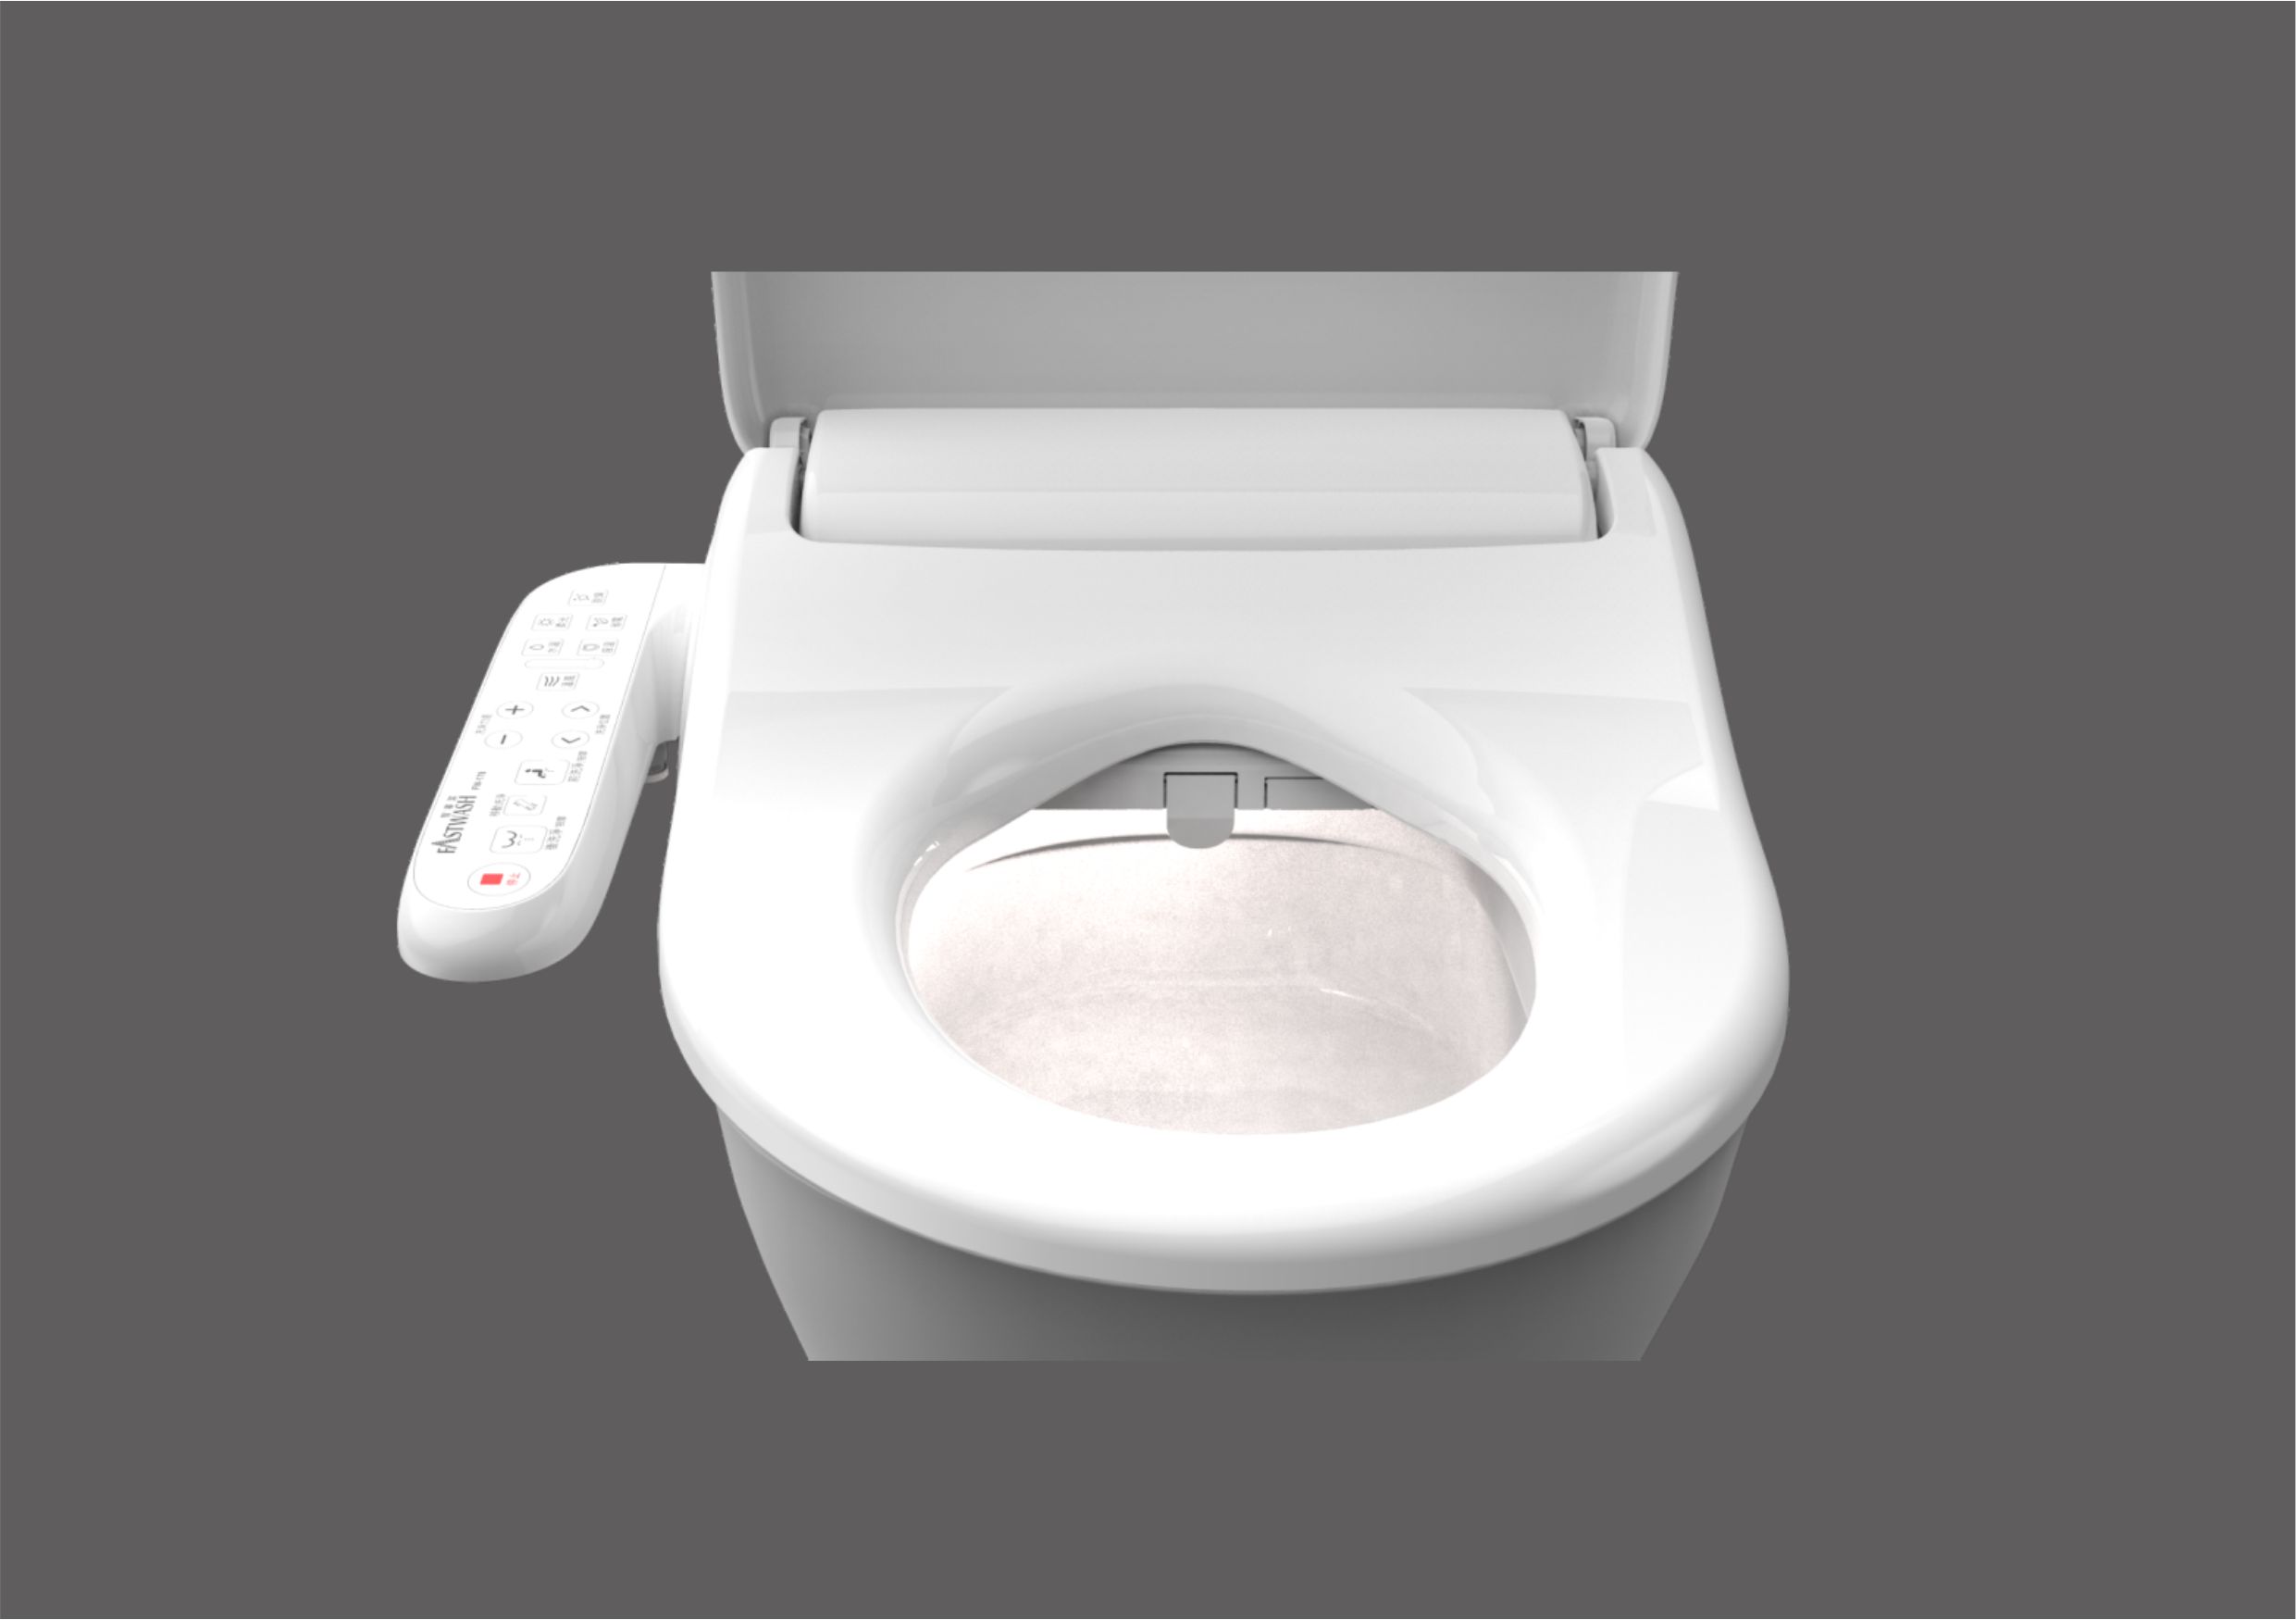 Funzionalità intuitive per il sedile WC intelligente